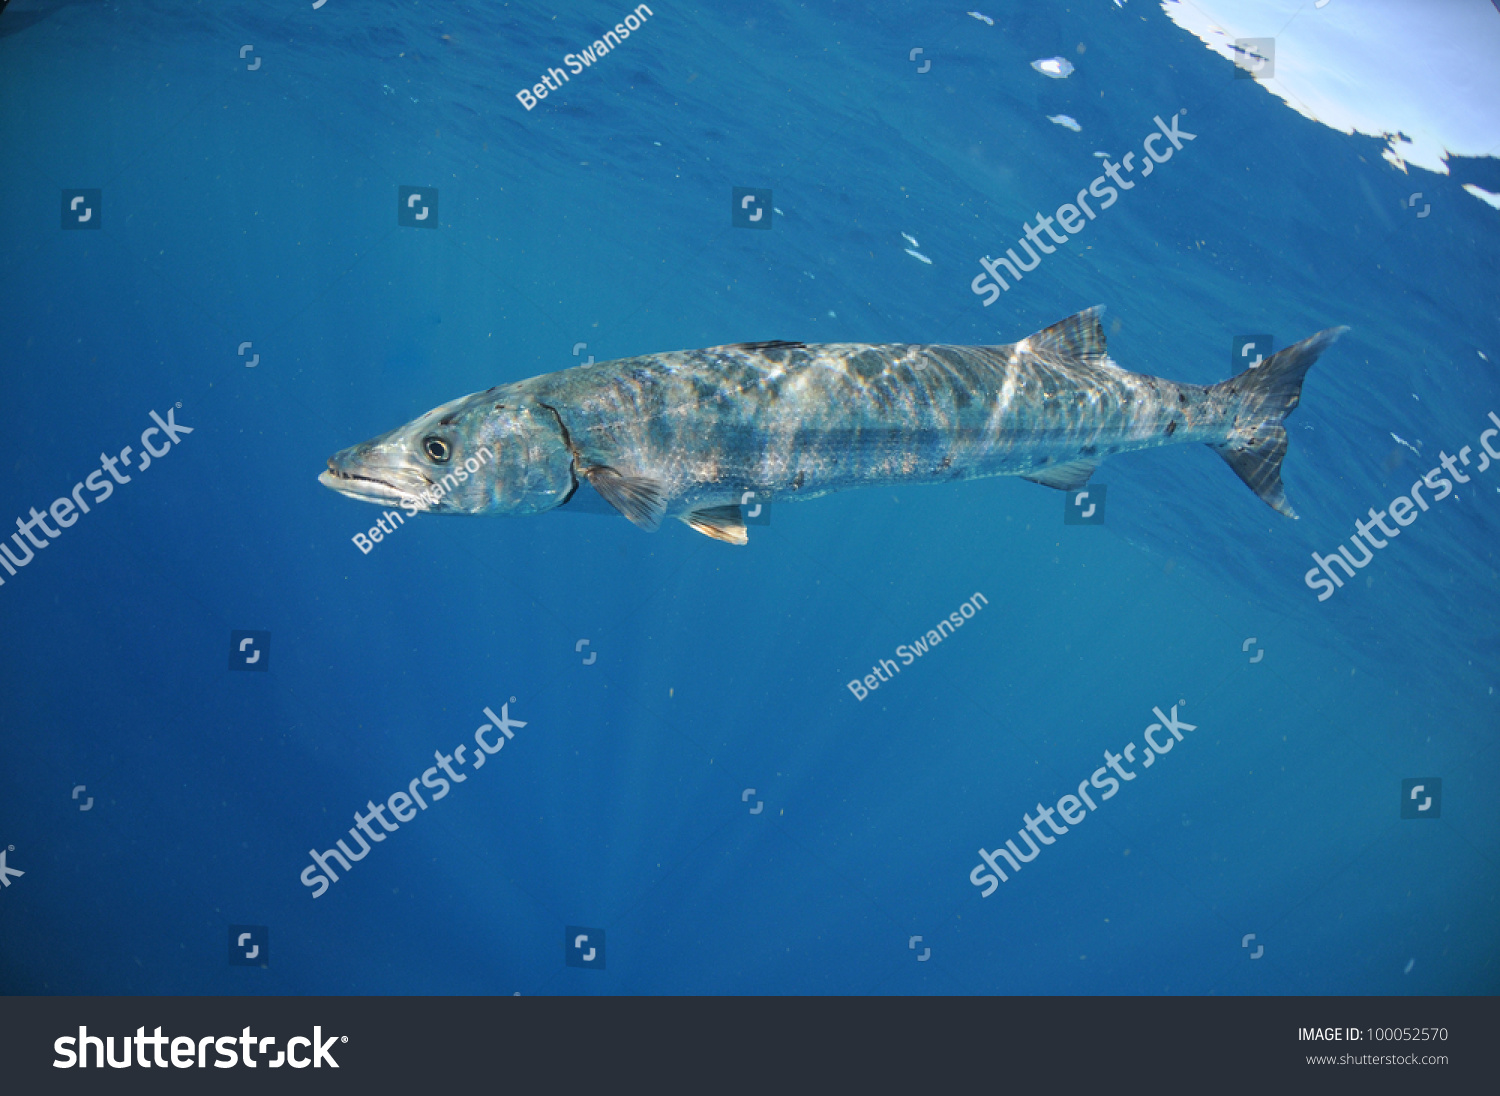 Barracuda fish underwater in ocean #100052570